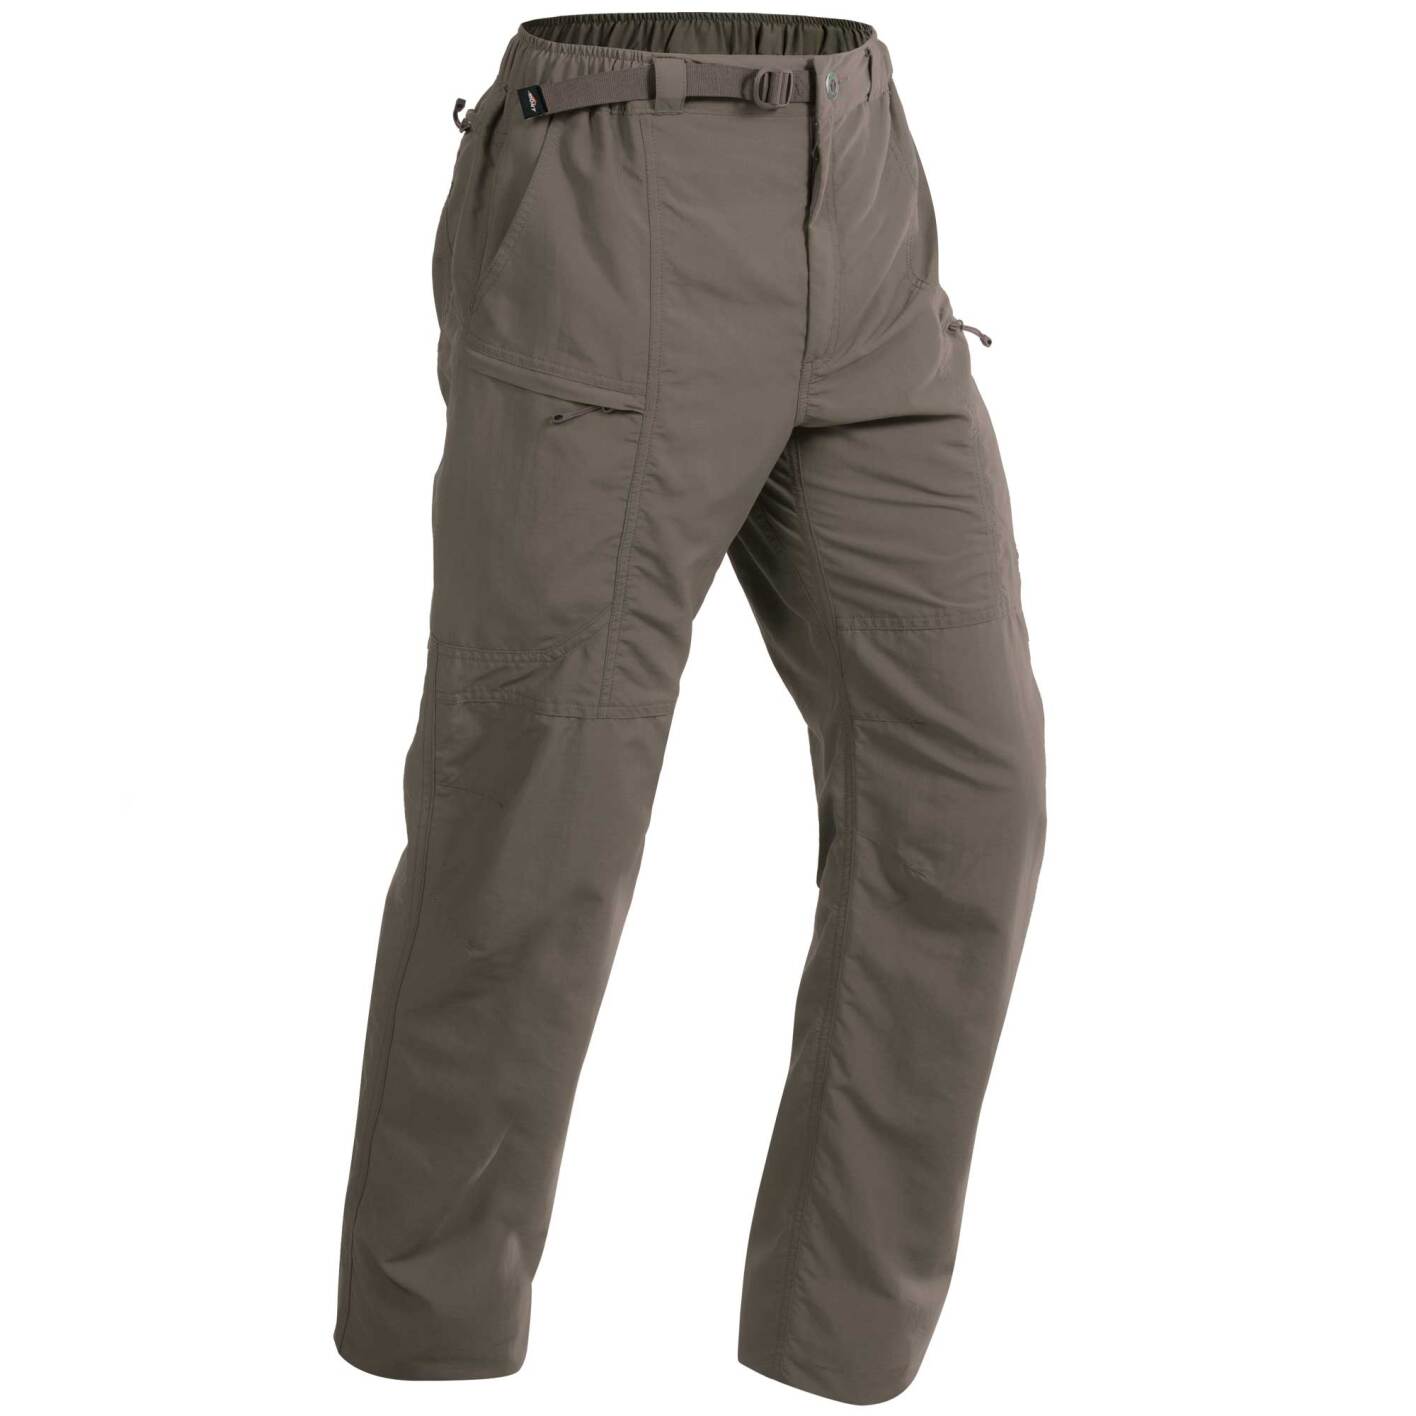 Mont Adventure Light Pants (Men) - Driftwood - Aspire Adventure Equipment